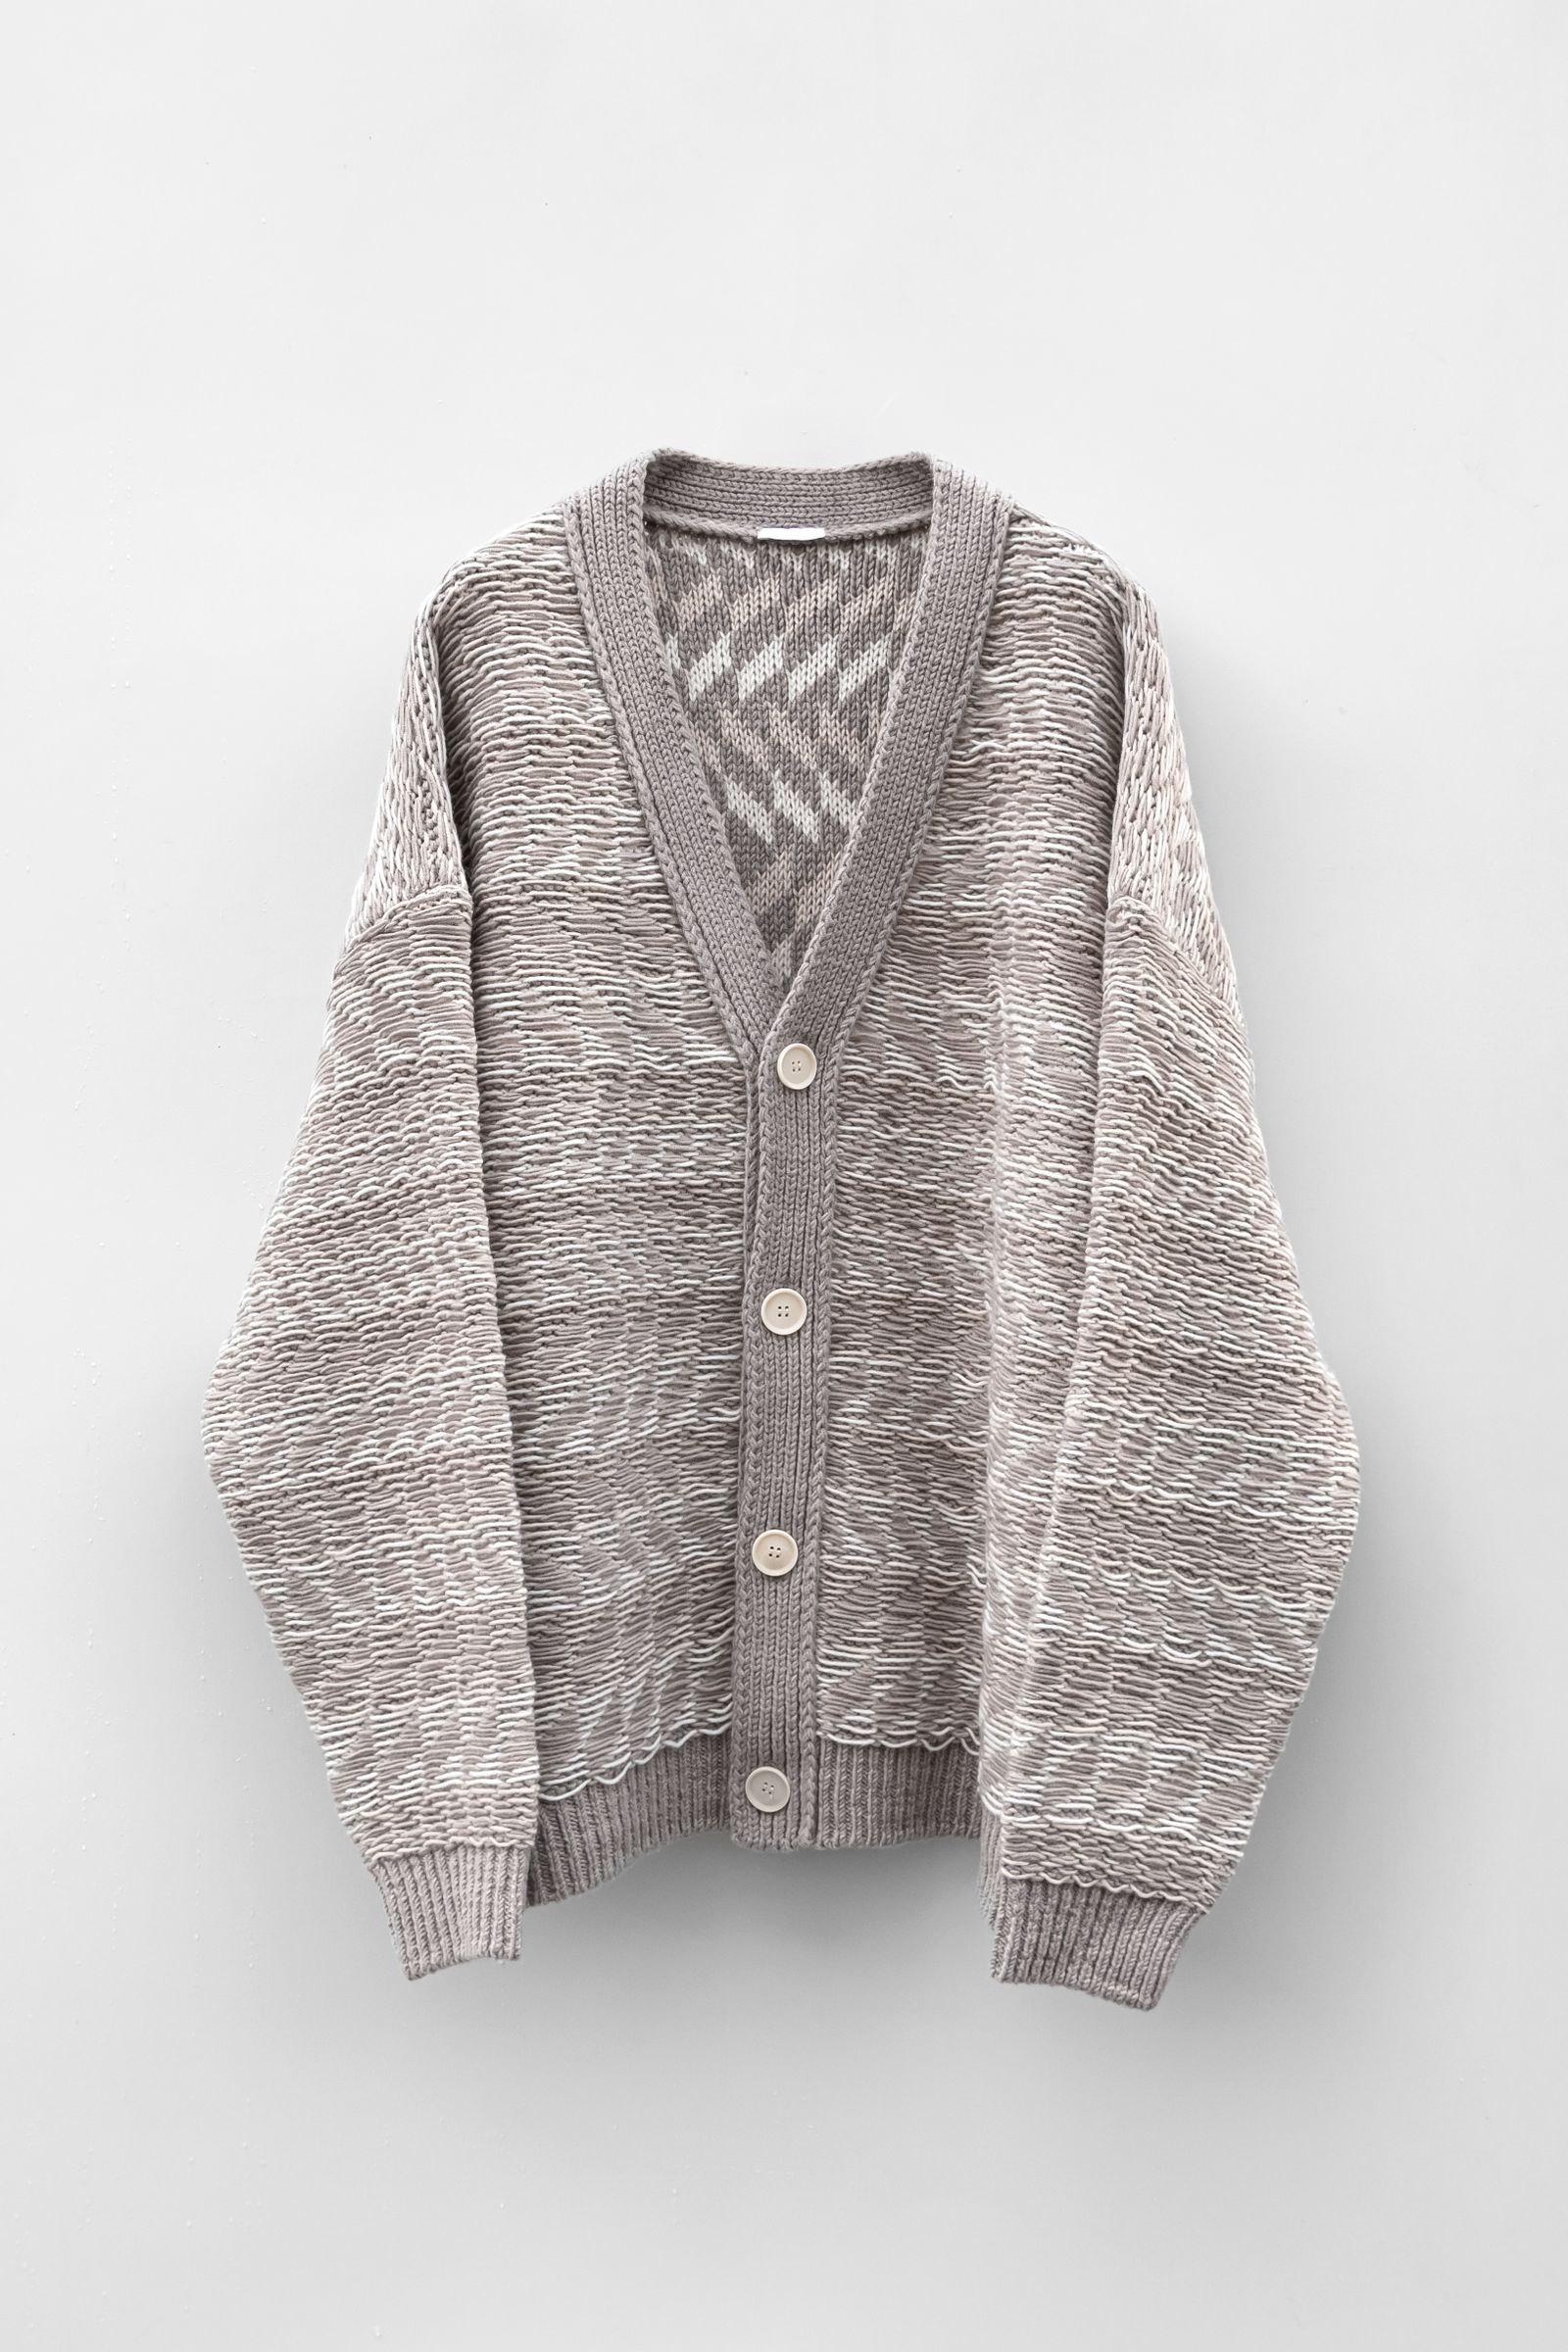 Blanc YM - Inside out knit JKT / Beige | Retikle Online Store